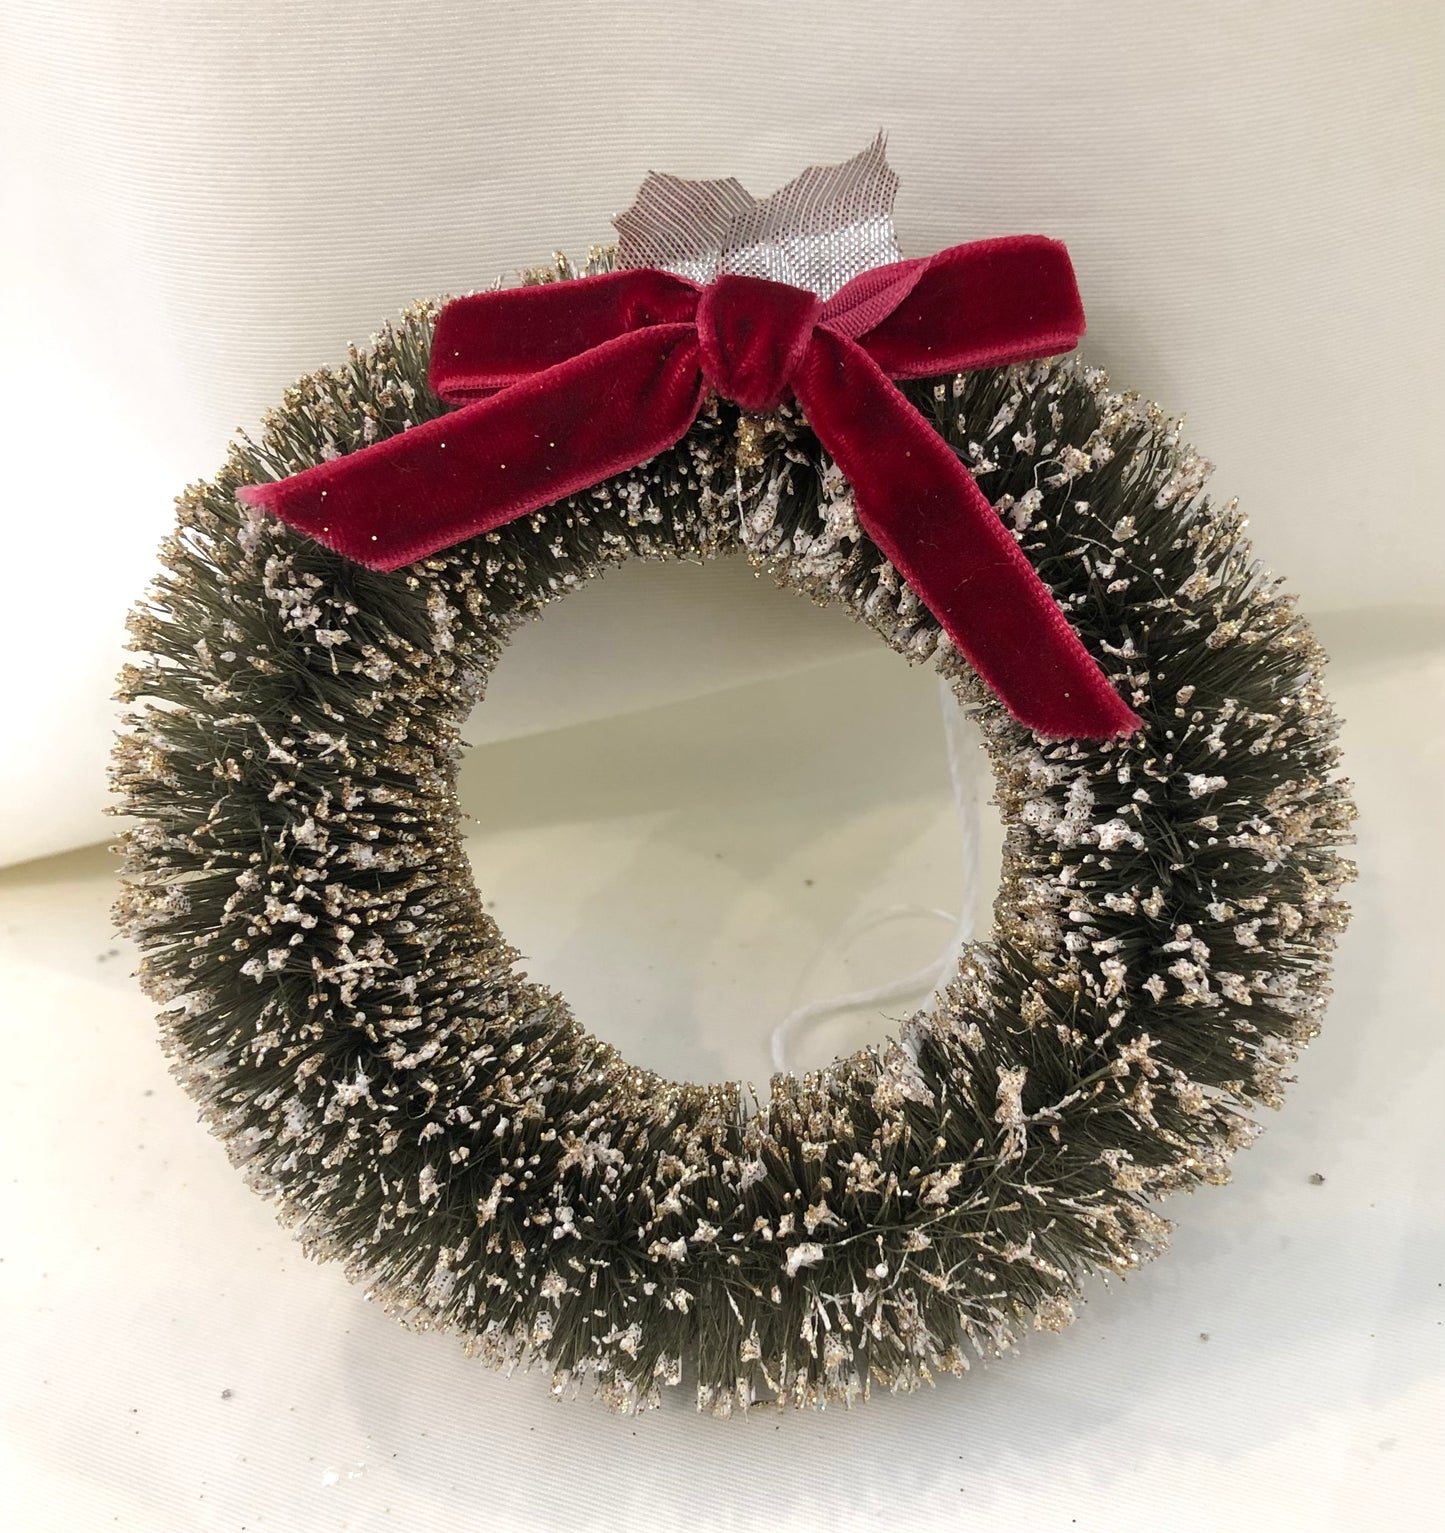 Bristle Brush Wreath Ornament with Red Velvet Bow